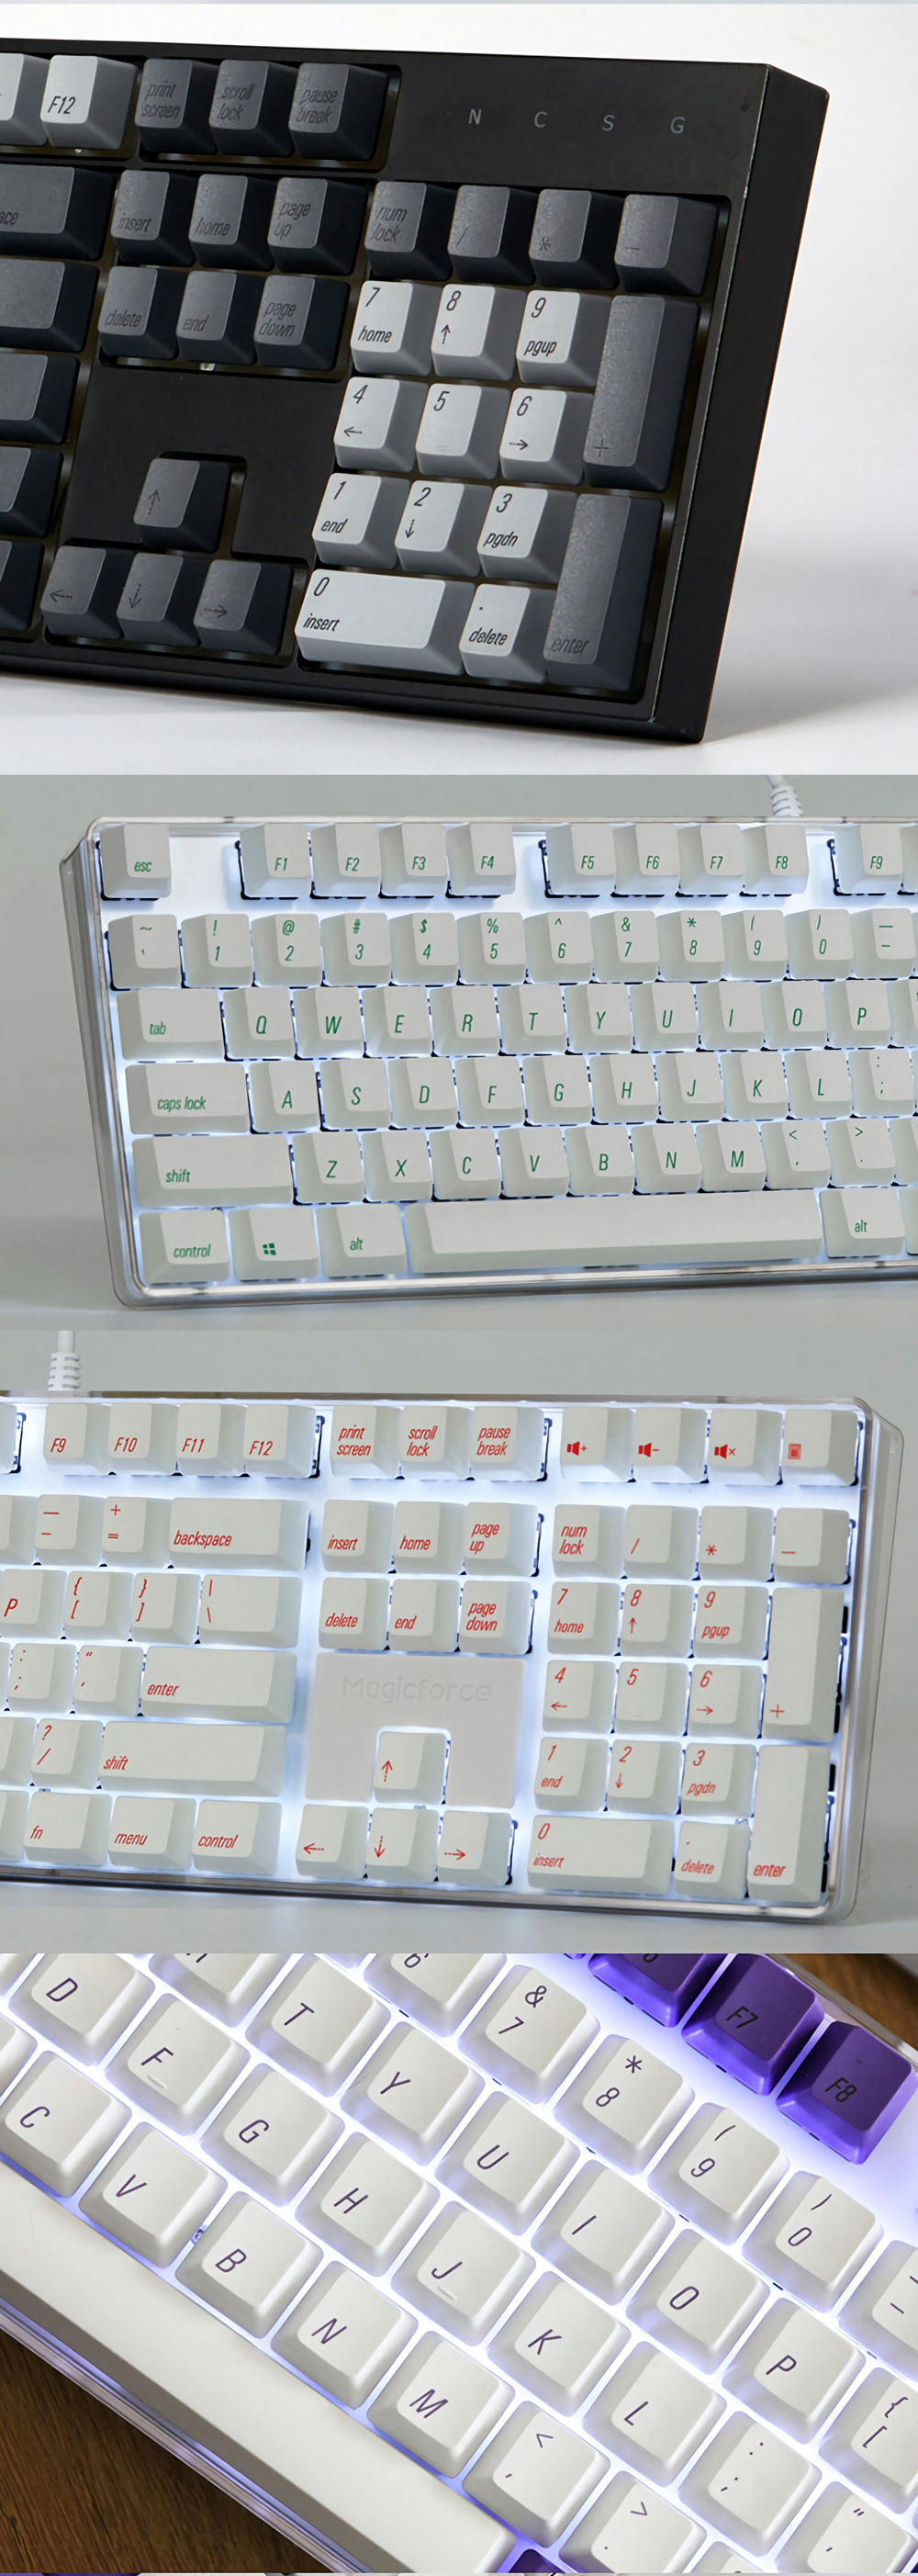 Magicforce 108 Key UV-Light Color Dye-sub PBT Keycaps Keycap Set for Mechanical Keyboard 15